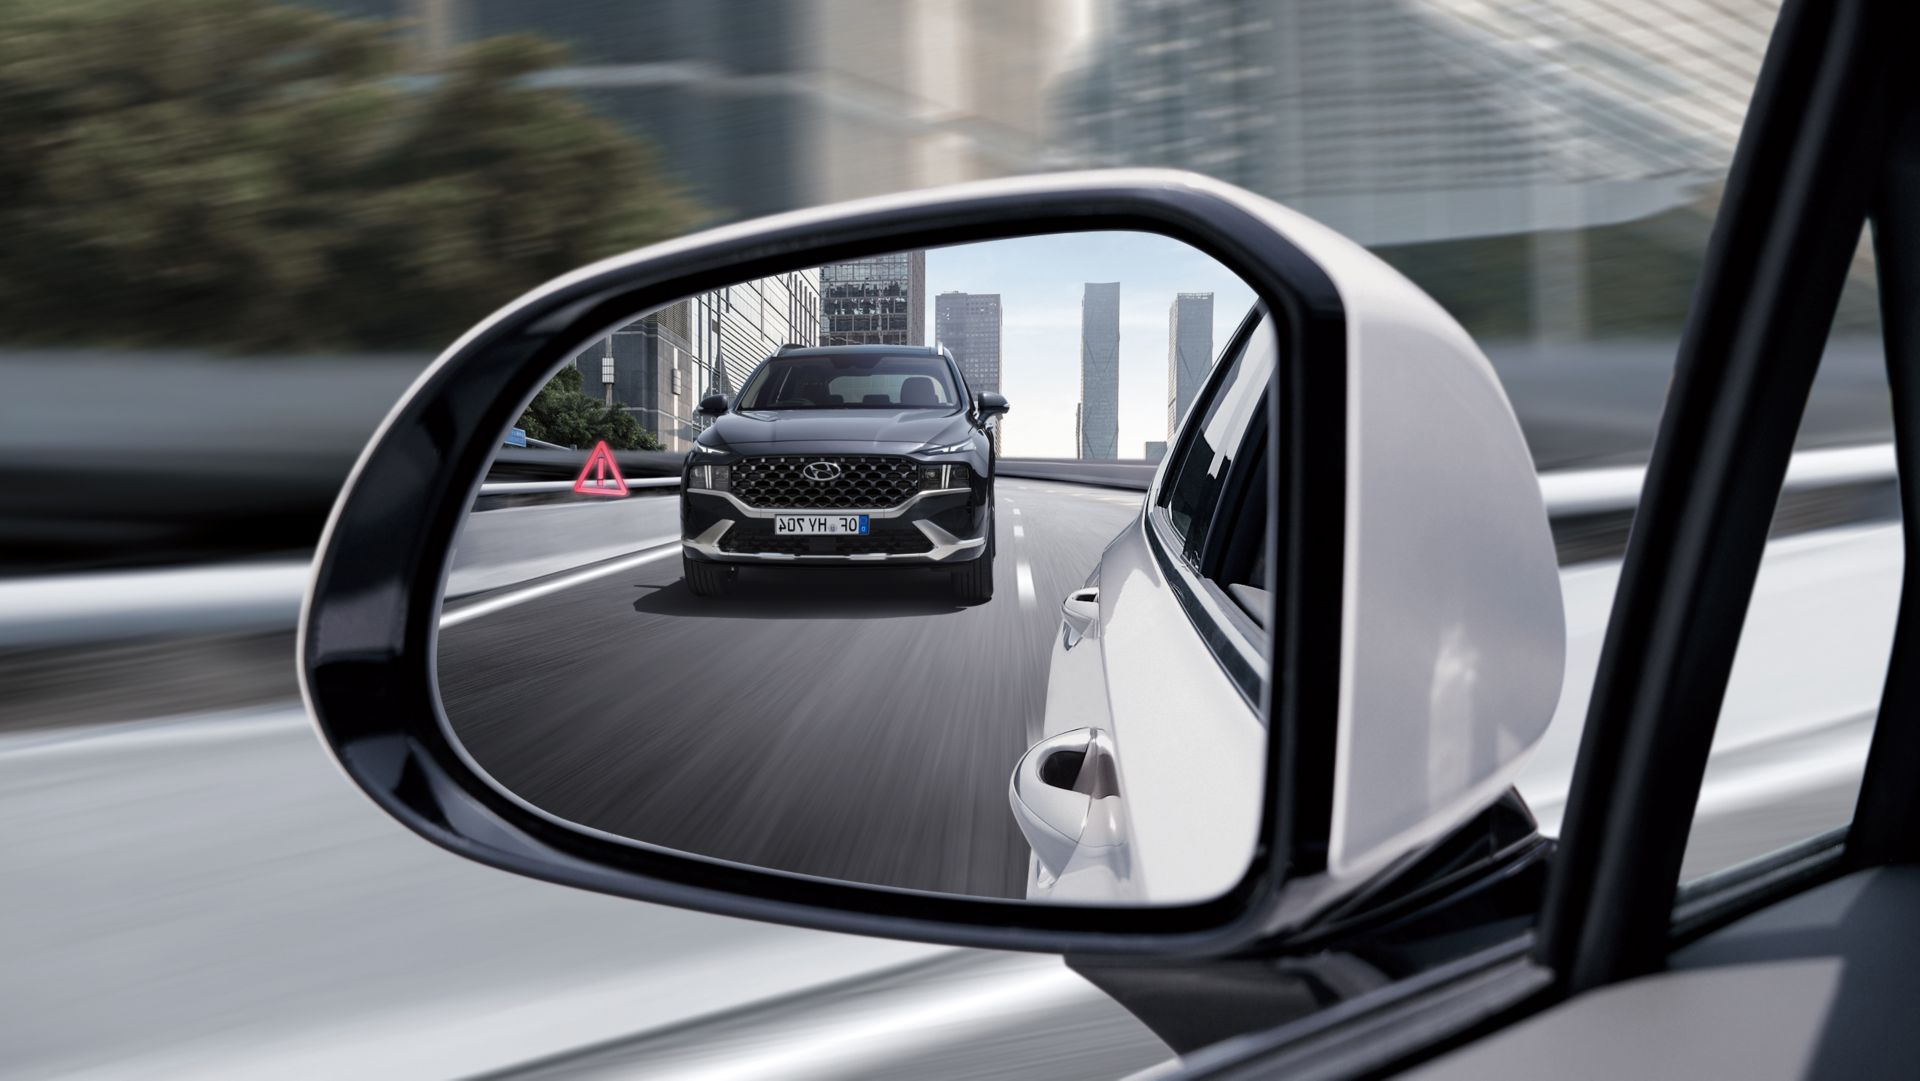 The side mirror of the new Hyundai Santa Fe Hybrid 7 seat SUV reflecting another Santa Fe Hybrid.